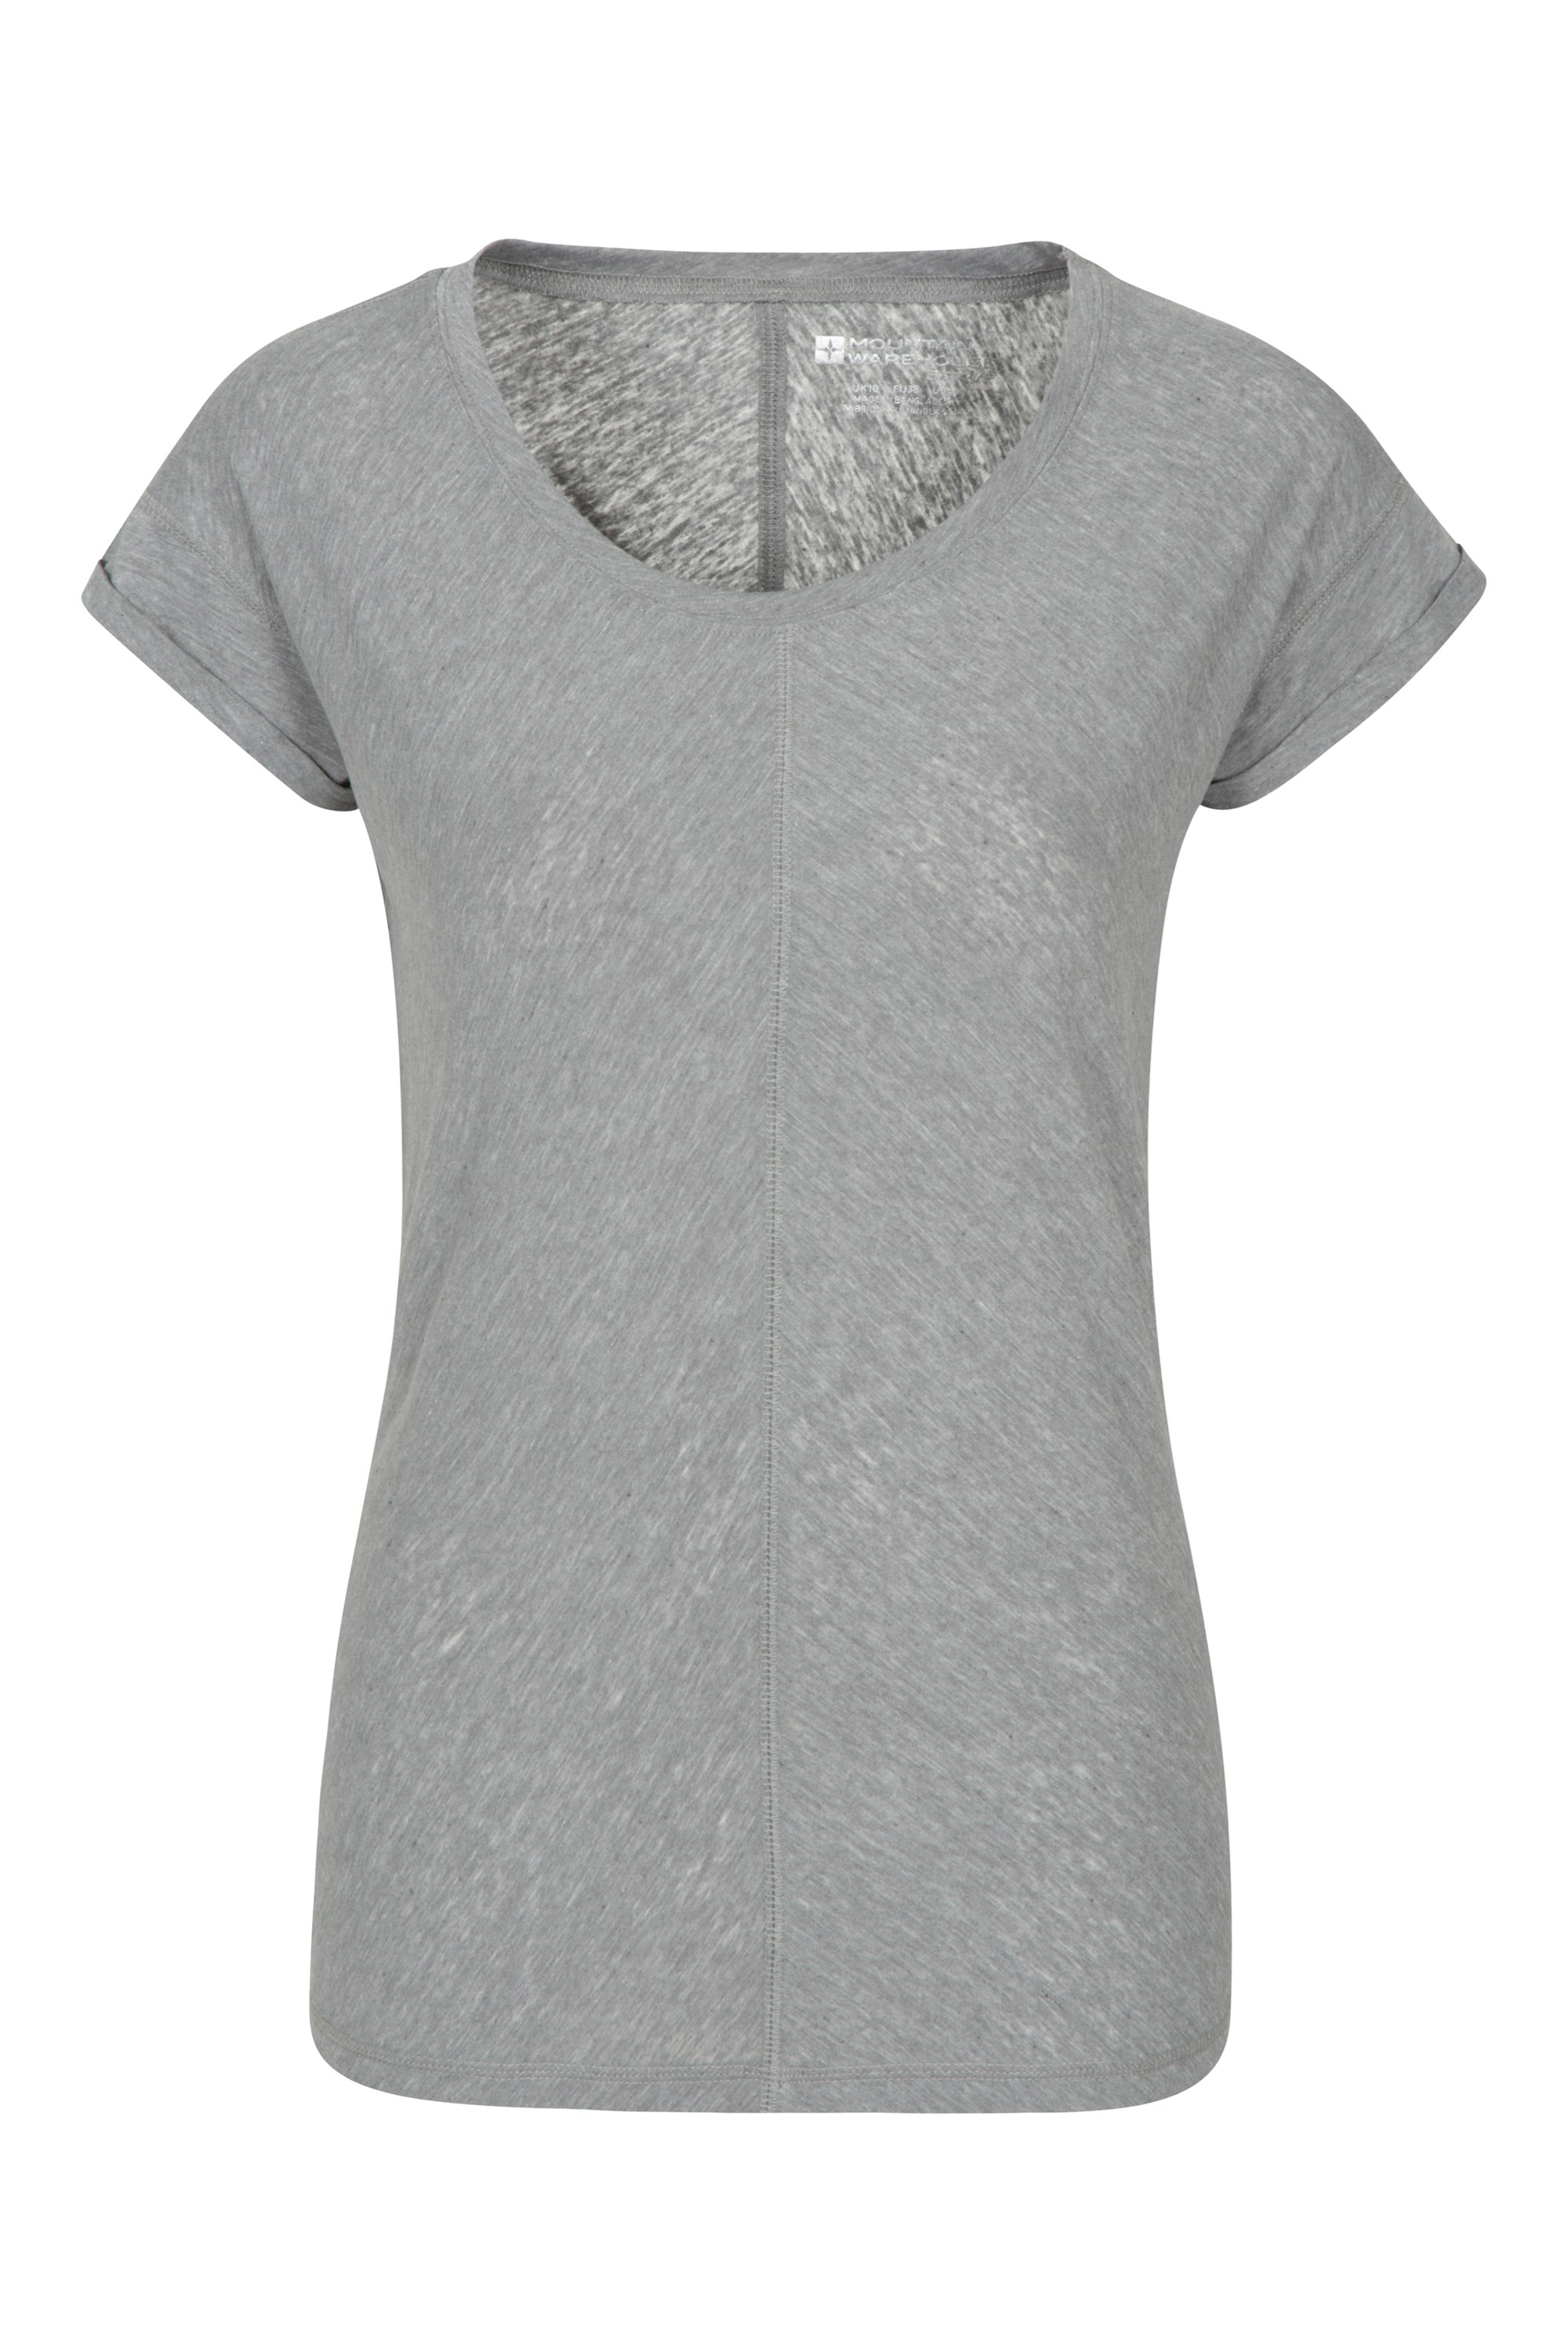 Retreat Slouch Womens T-Shirt - Grey